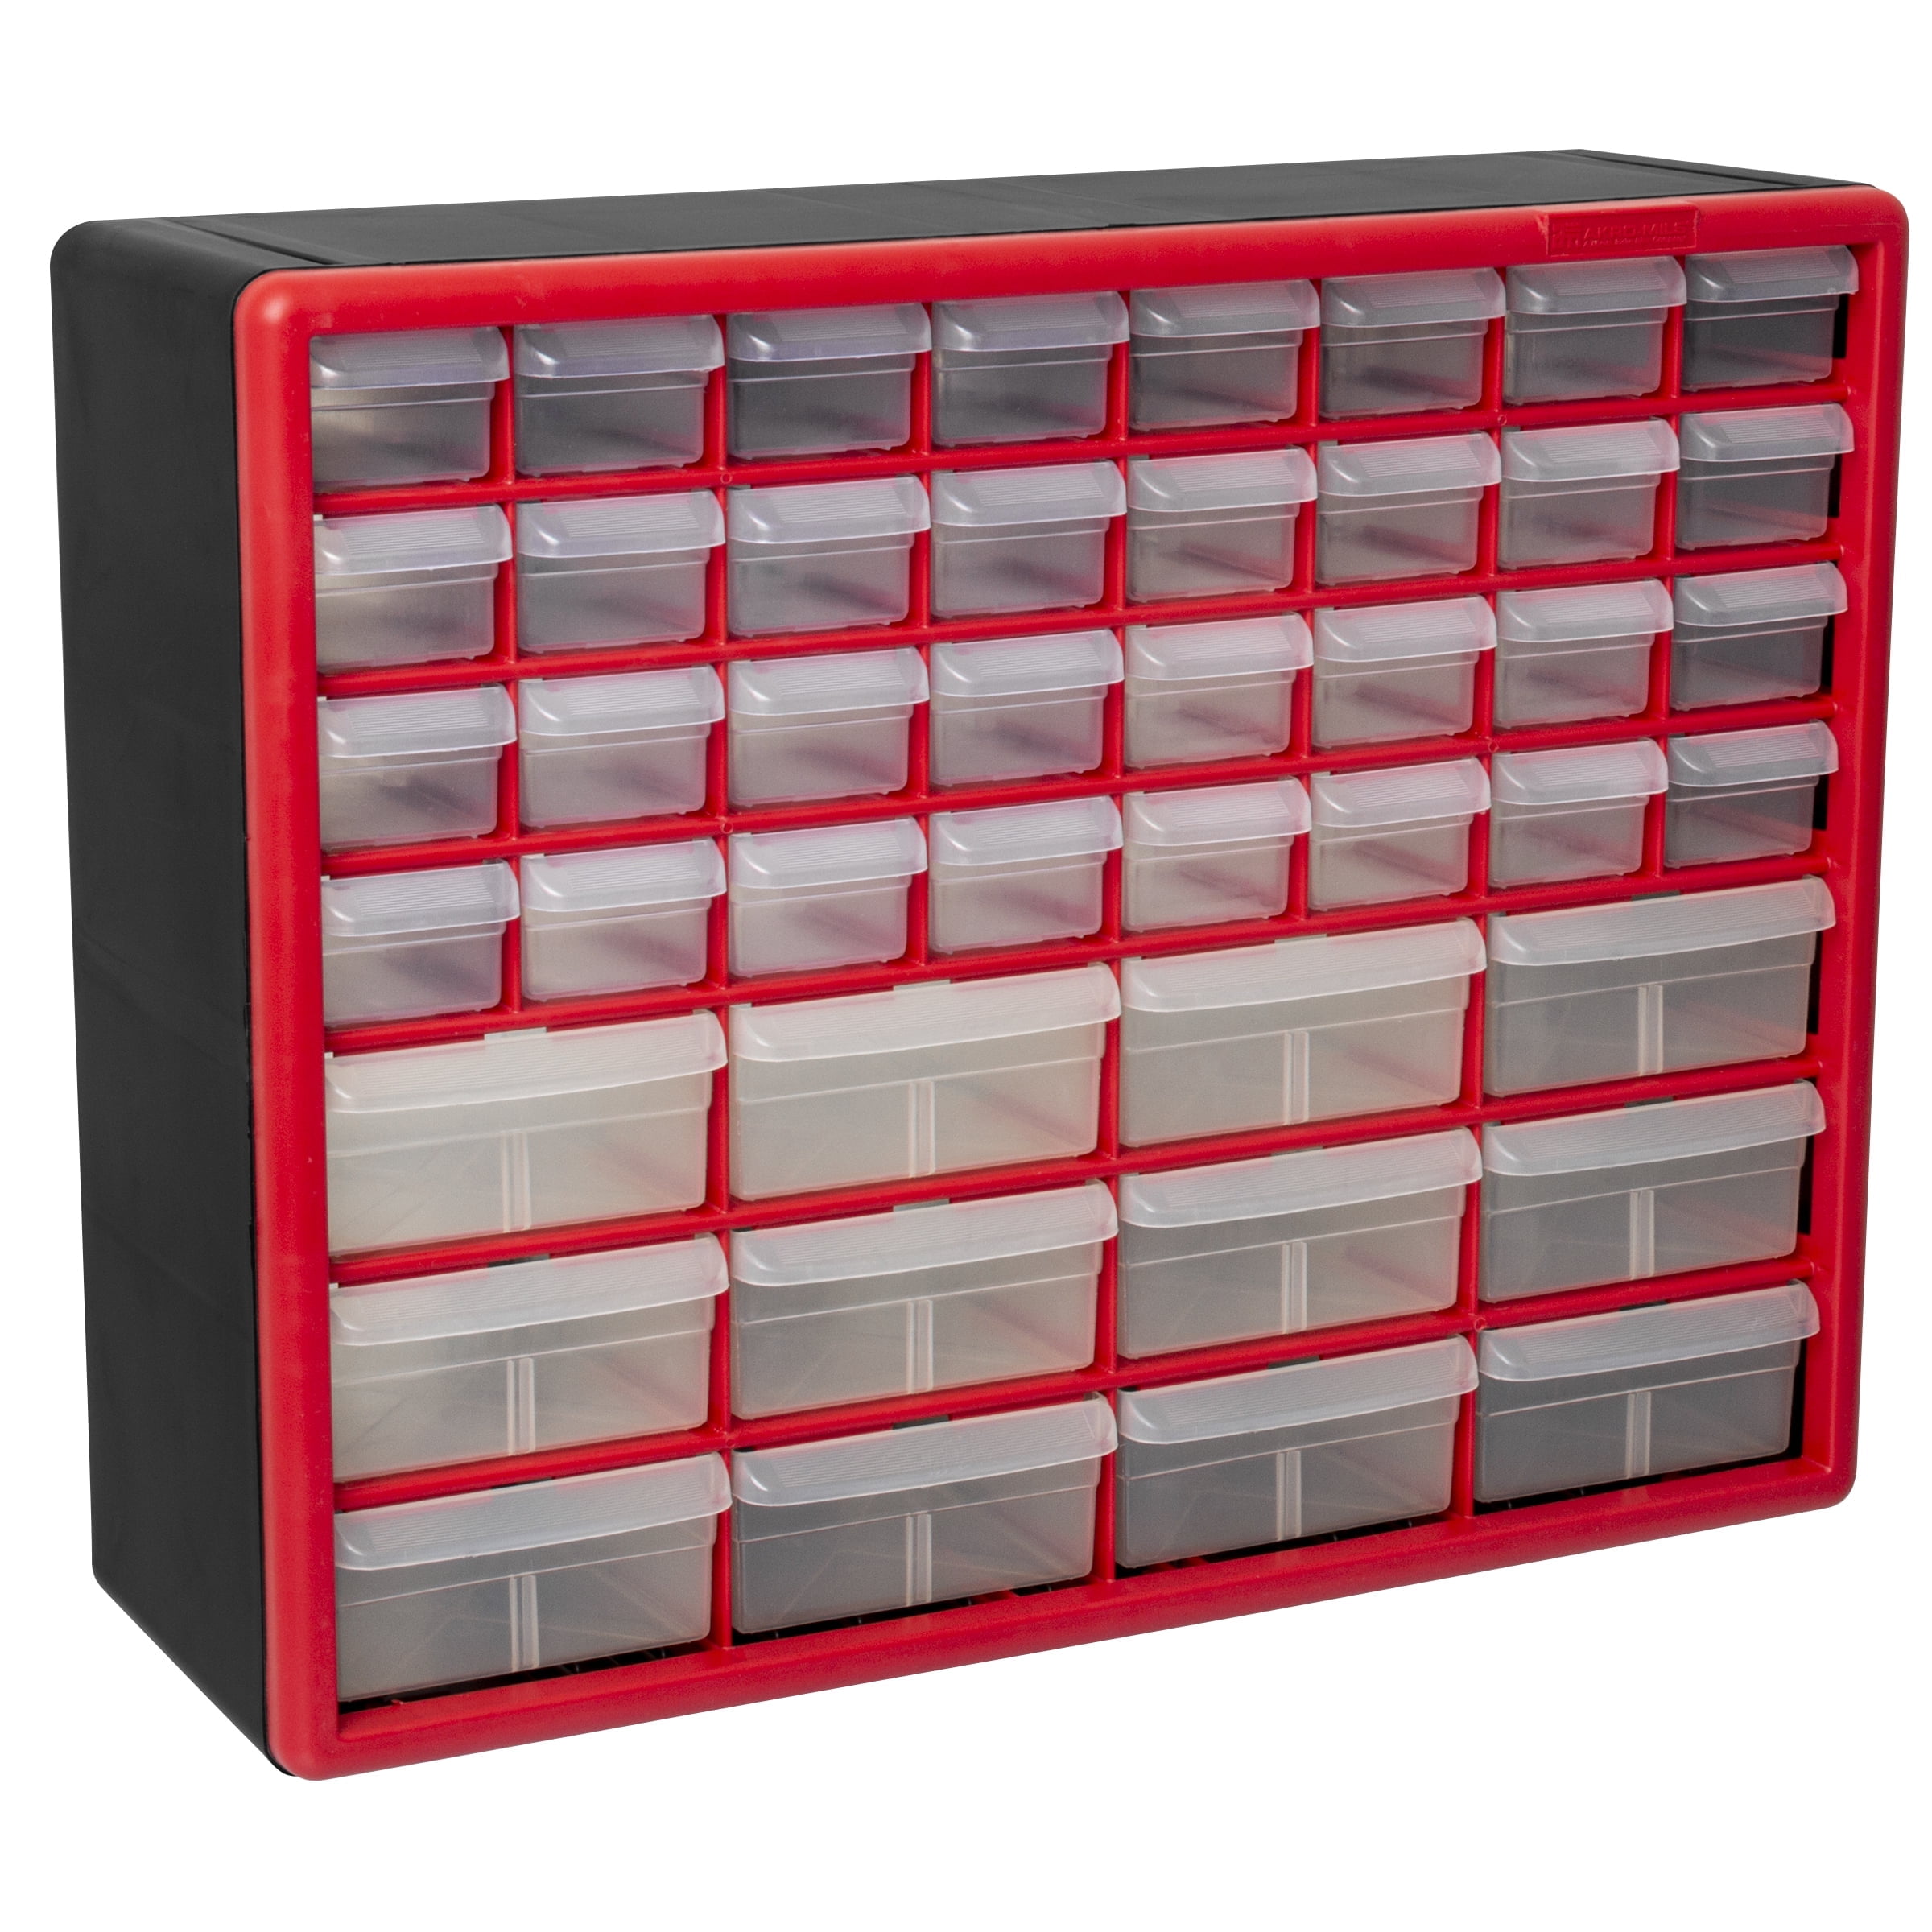 Akro-Mils Plastic Storage Cabinets, 64 Drawers